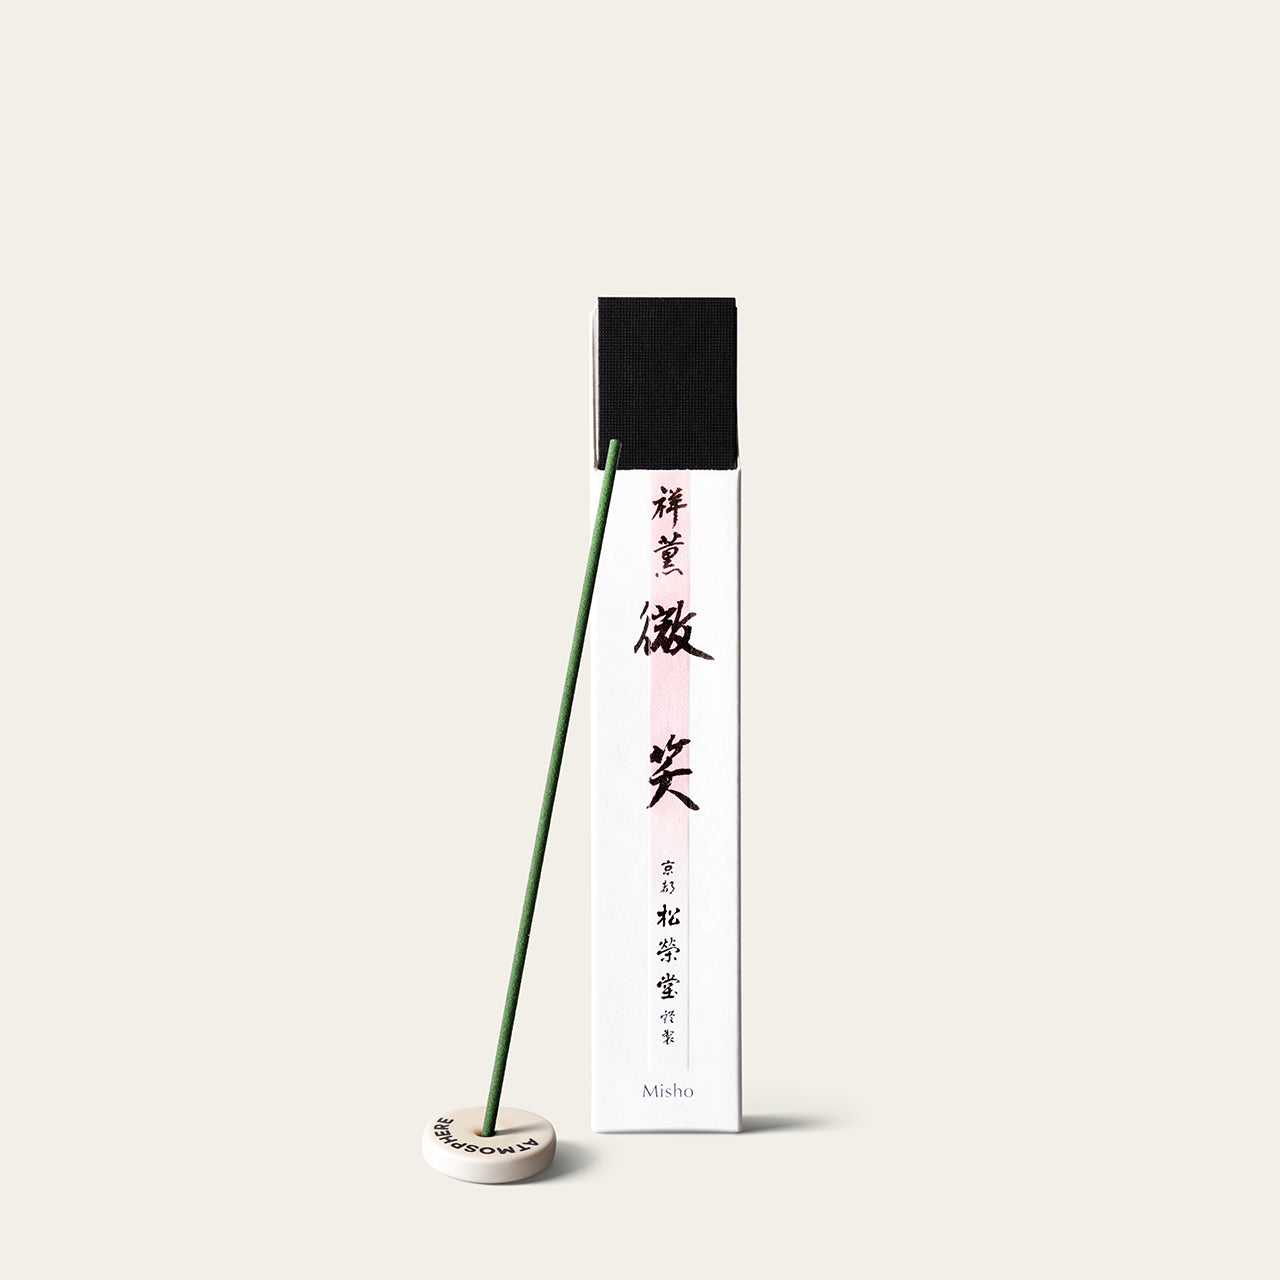 Shoyeido Premium Gentle Smile Misho Japanese incense sticks (15 sticks) with Atmosphere ceramic incense holder